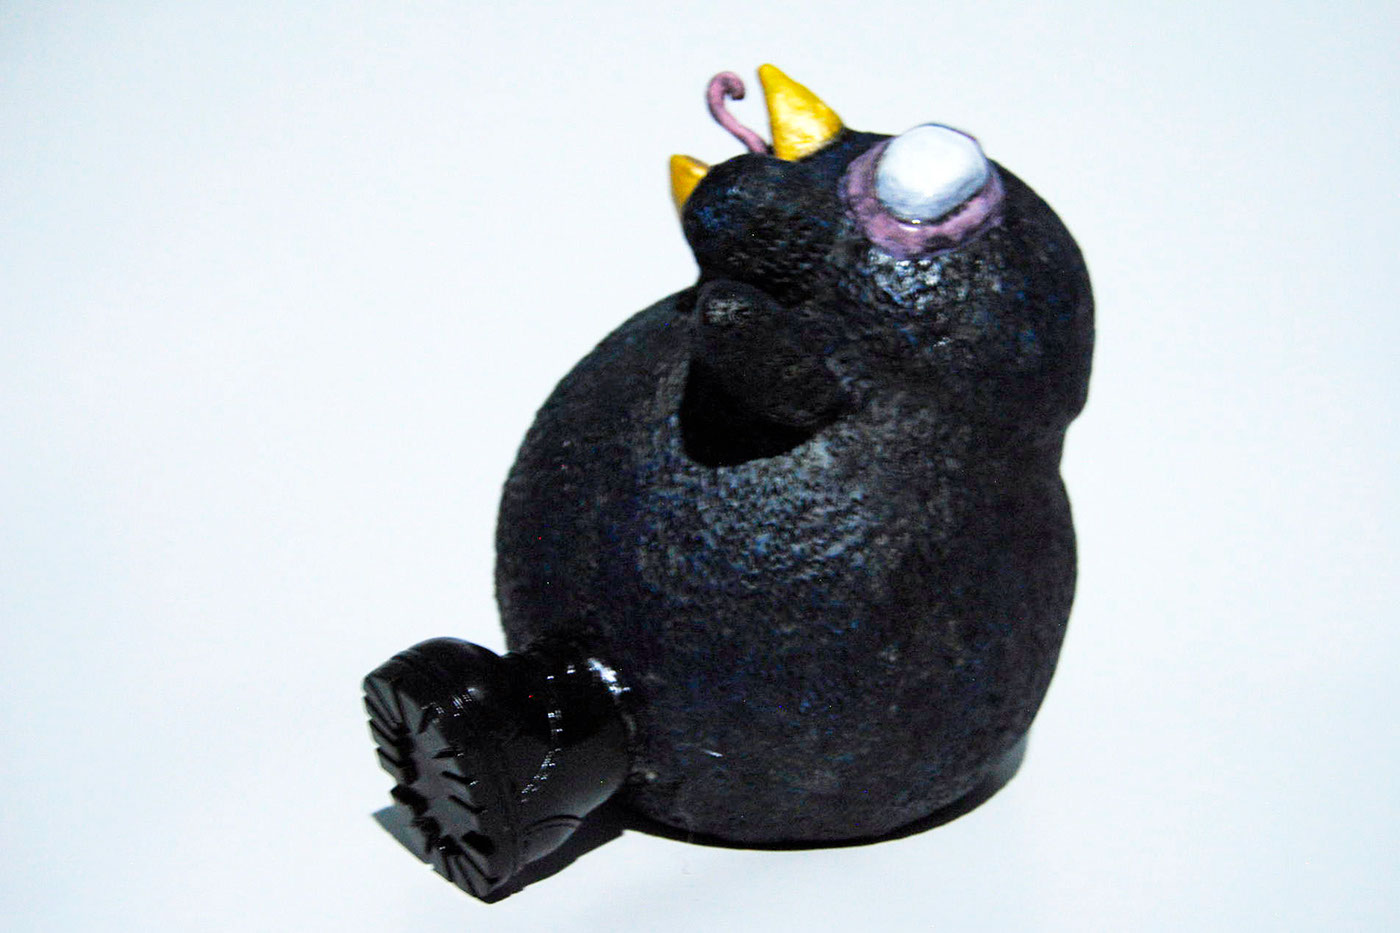 birds sculpture boots bone skull epoxy clay resin bizarre cute